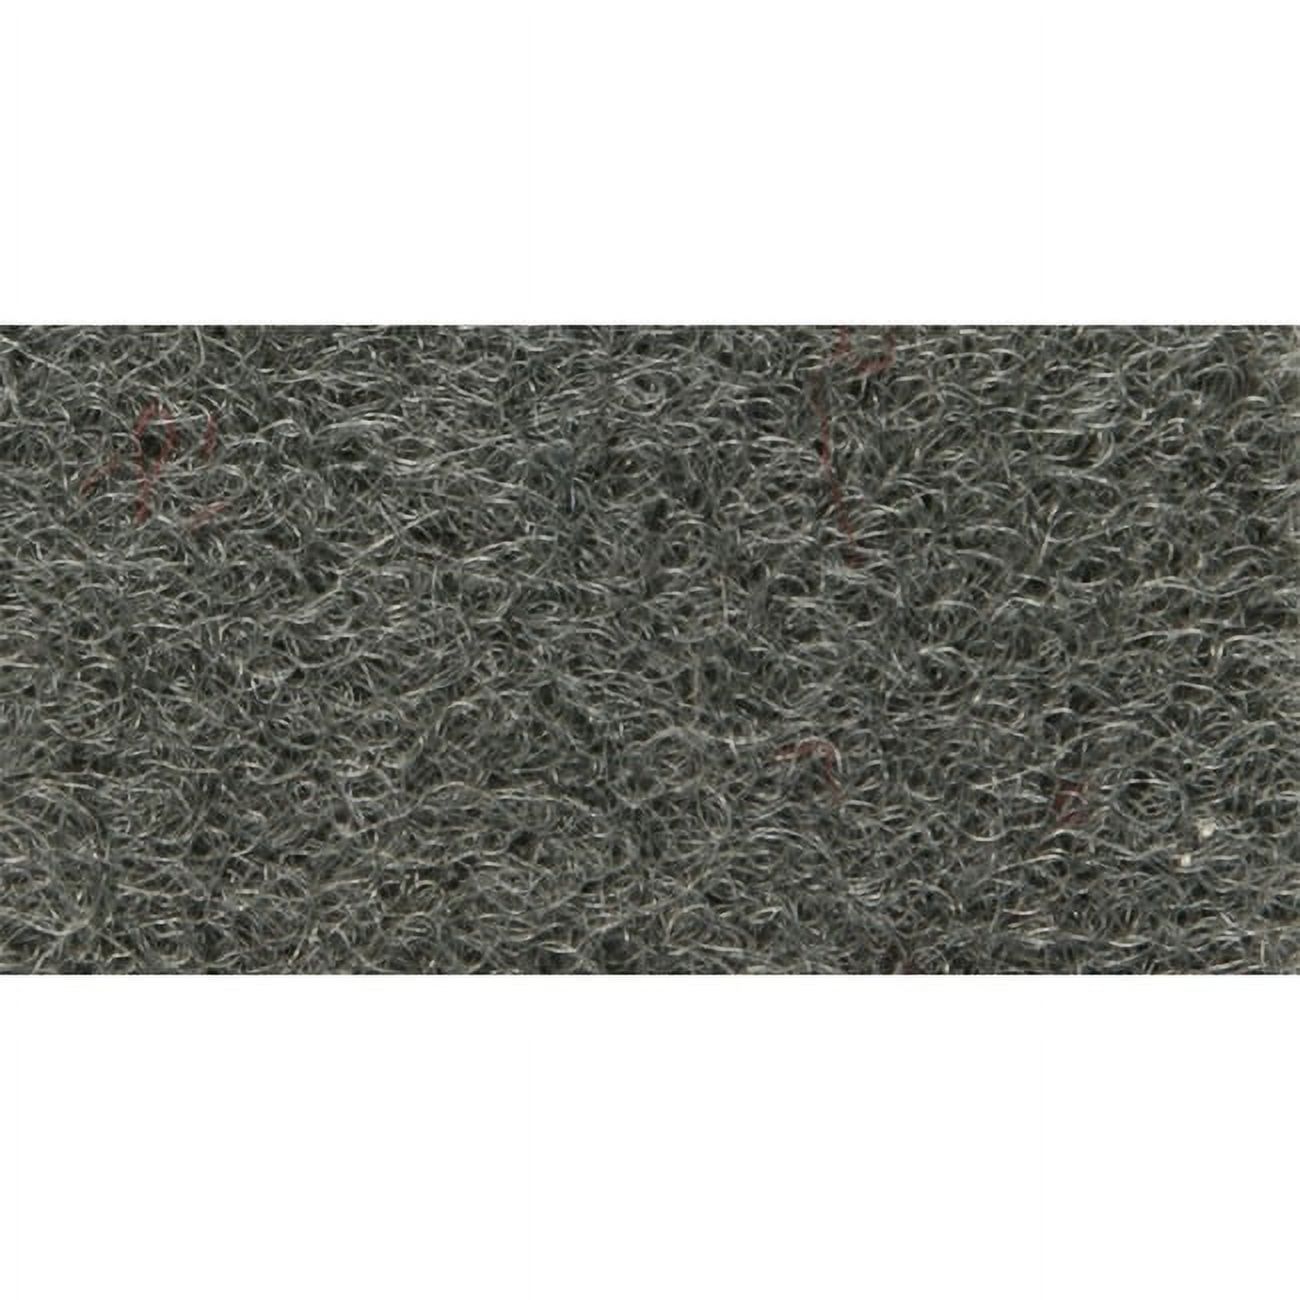 Install Bay AC362-5 Auto Carpet (Charcoal) 